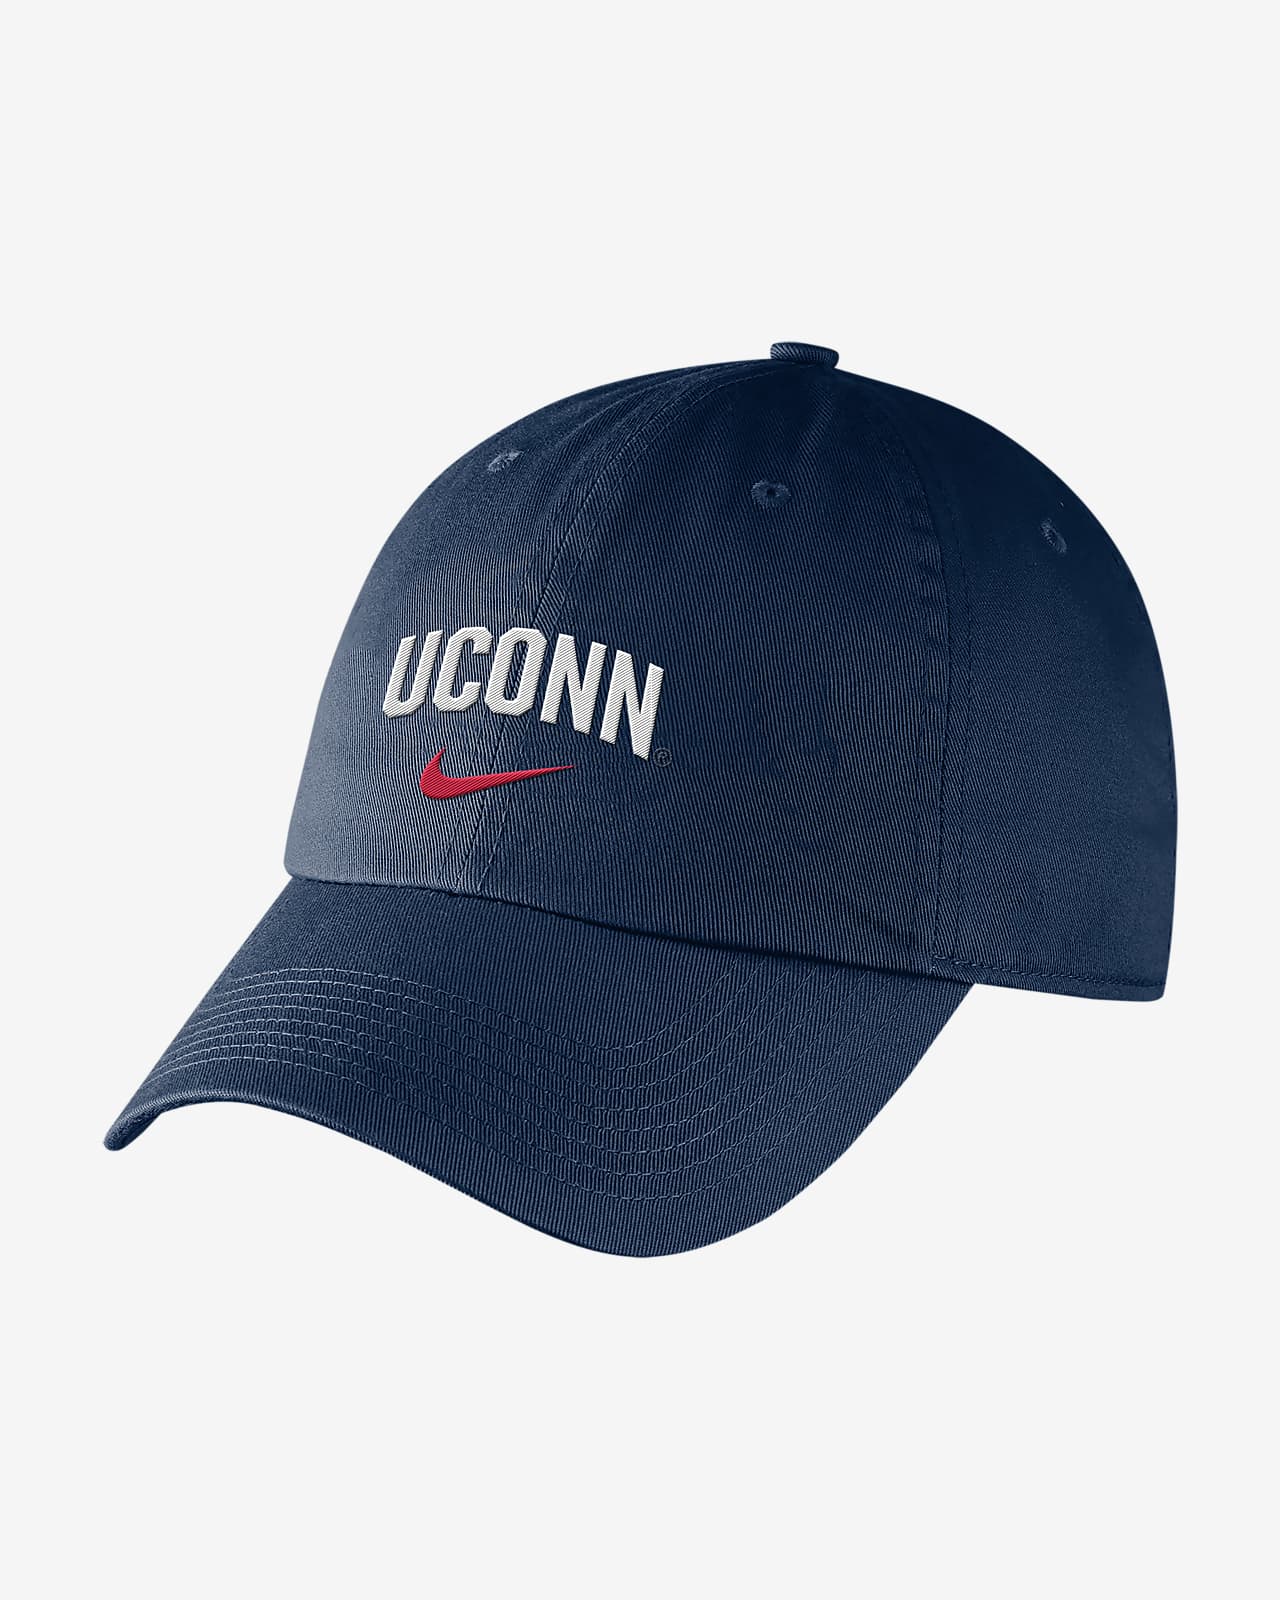 Nike College (UConn) Hat